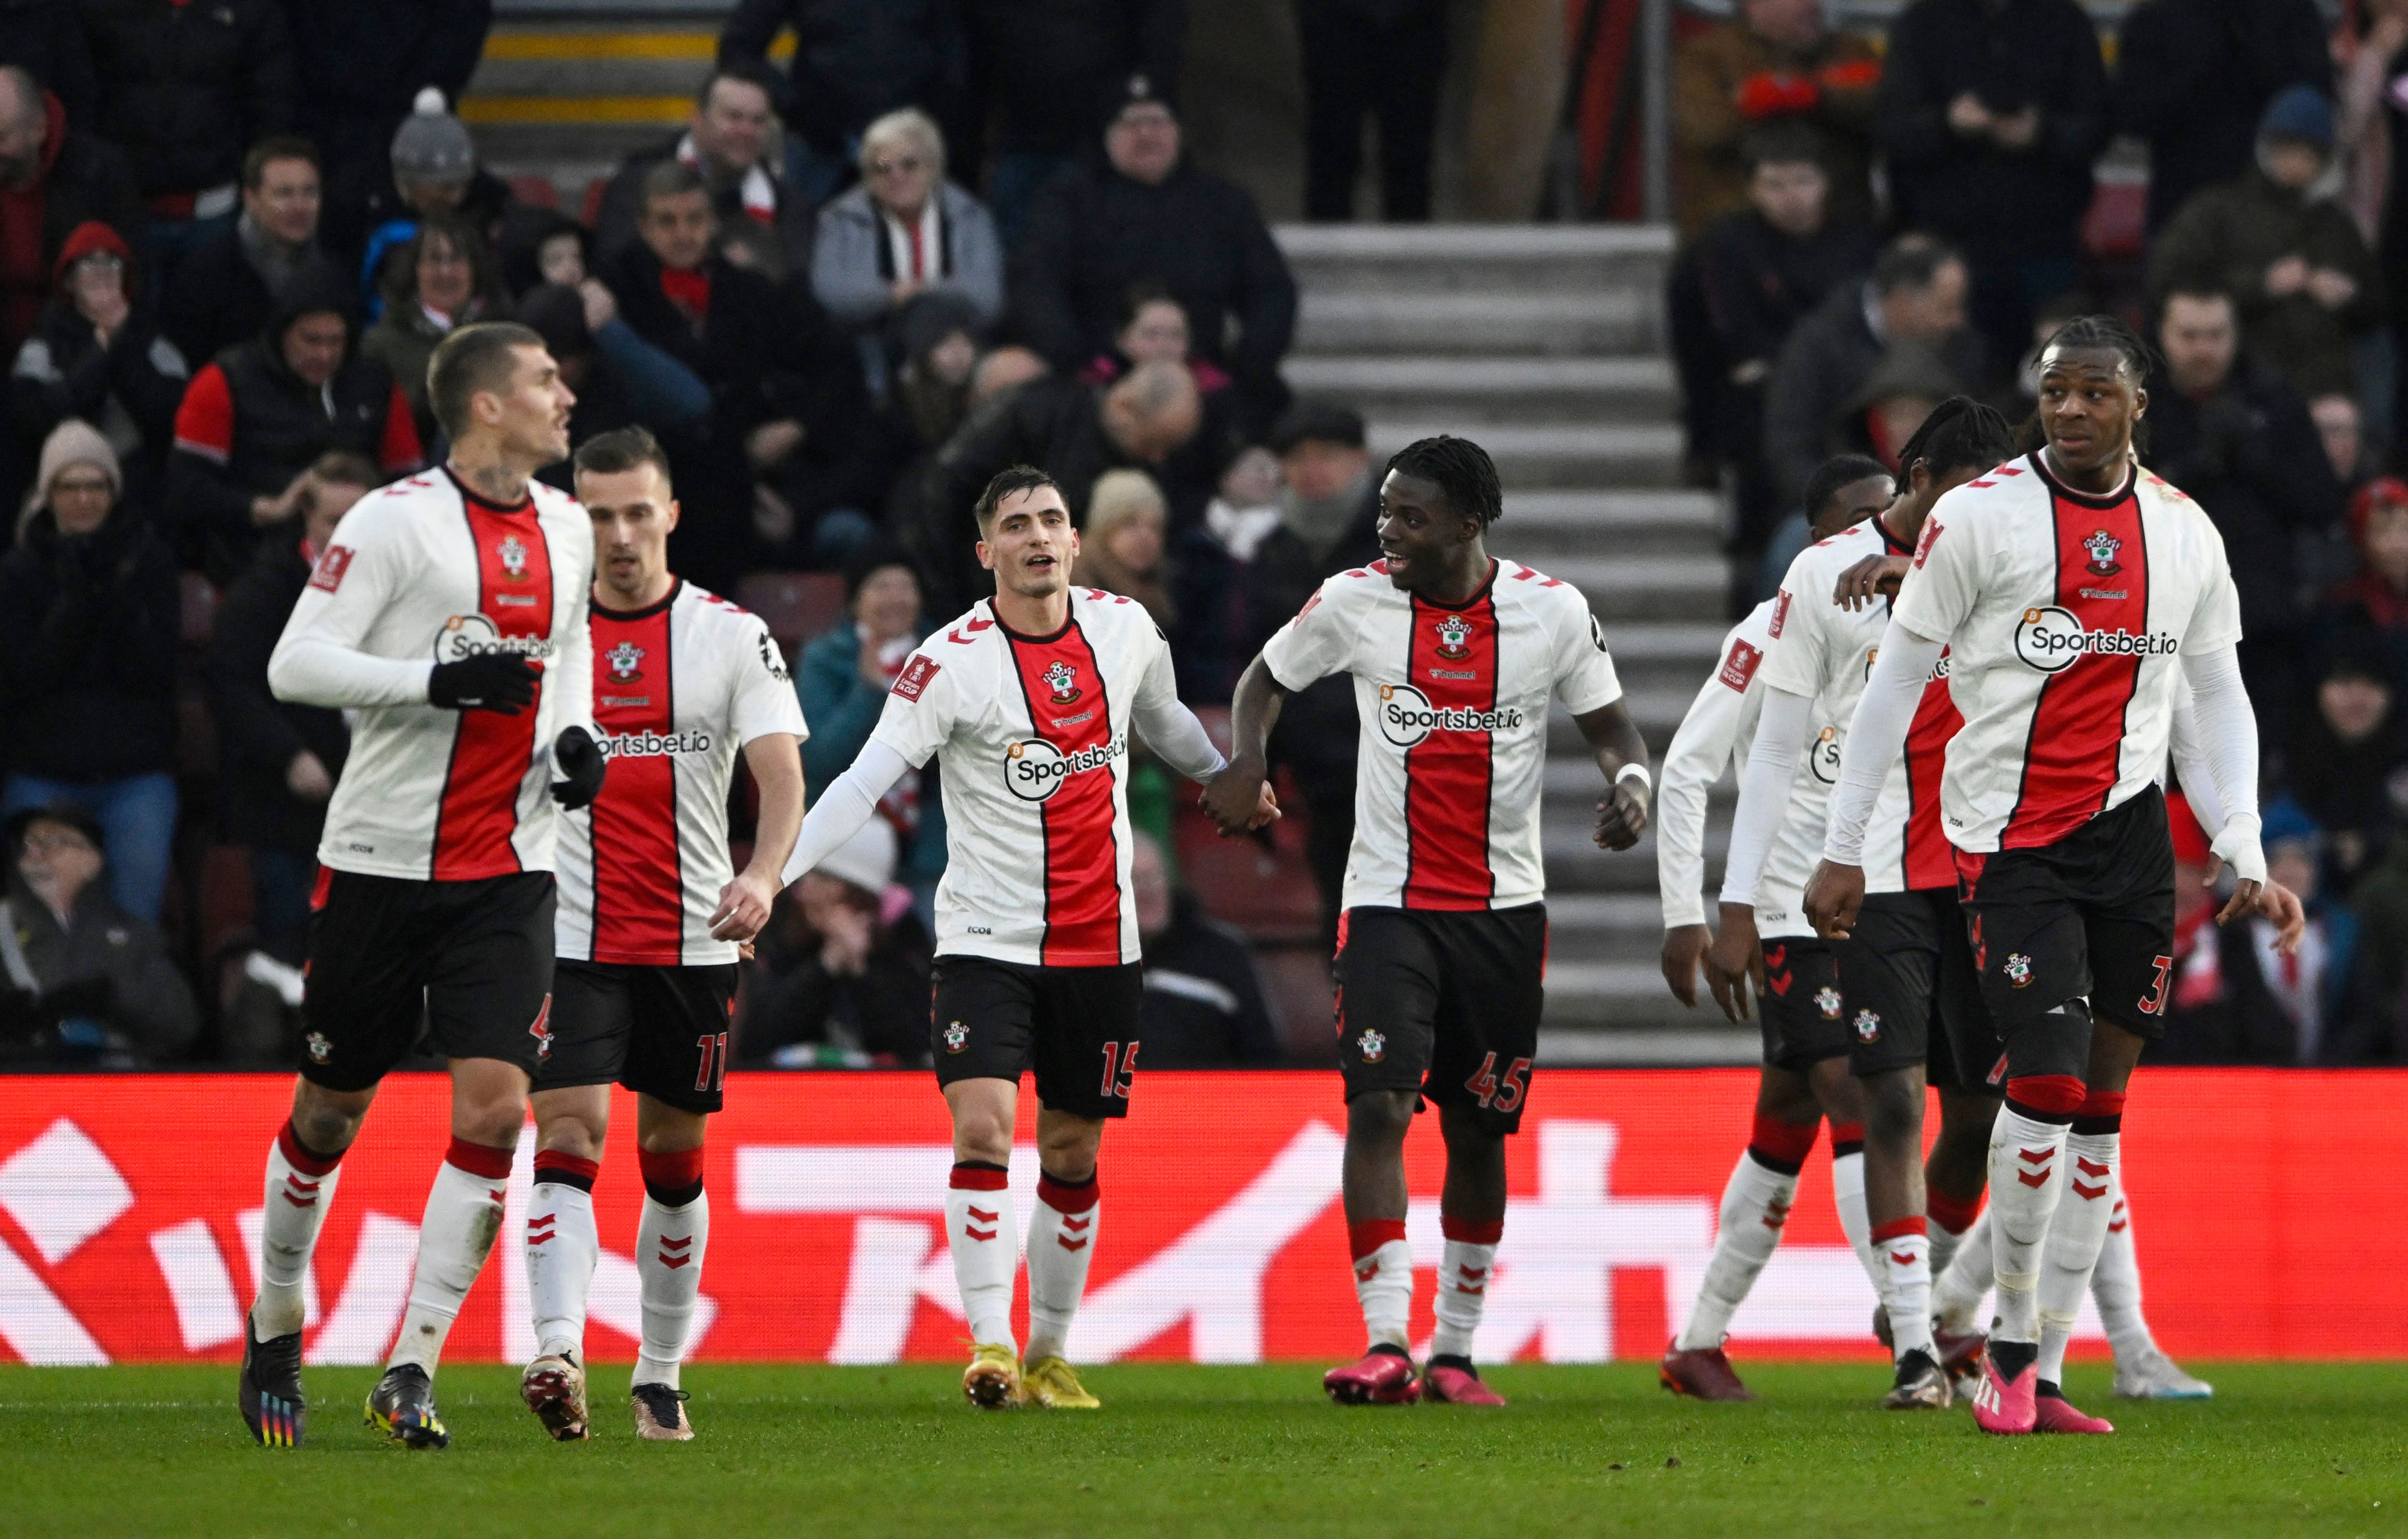 Southampton celebrate after scoring